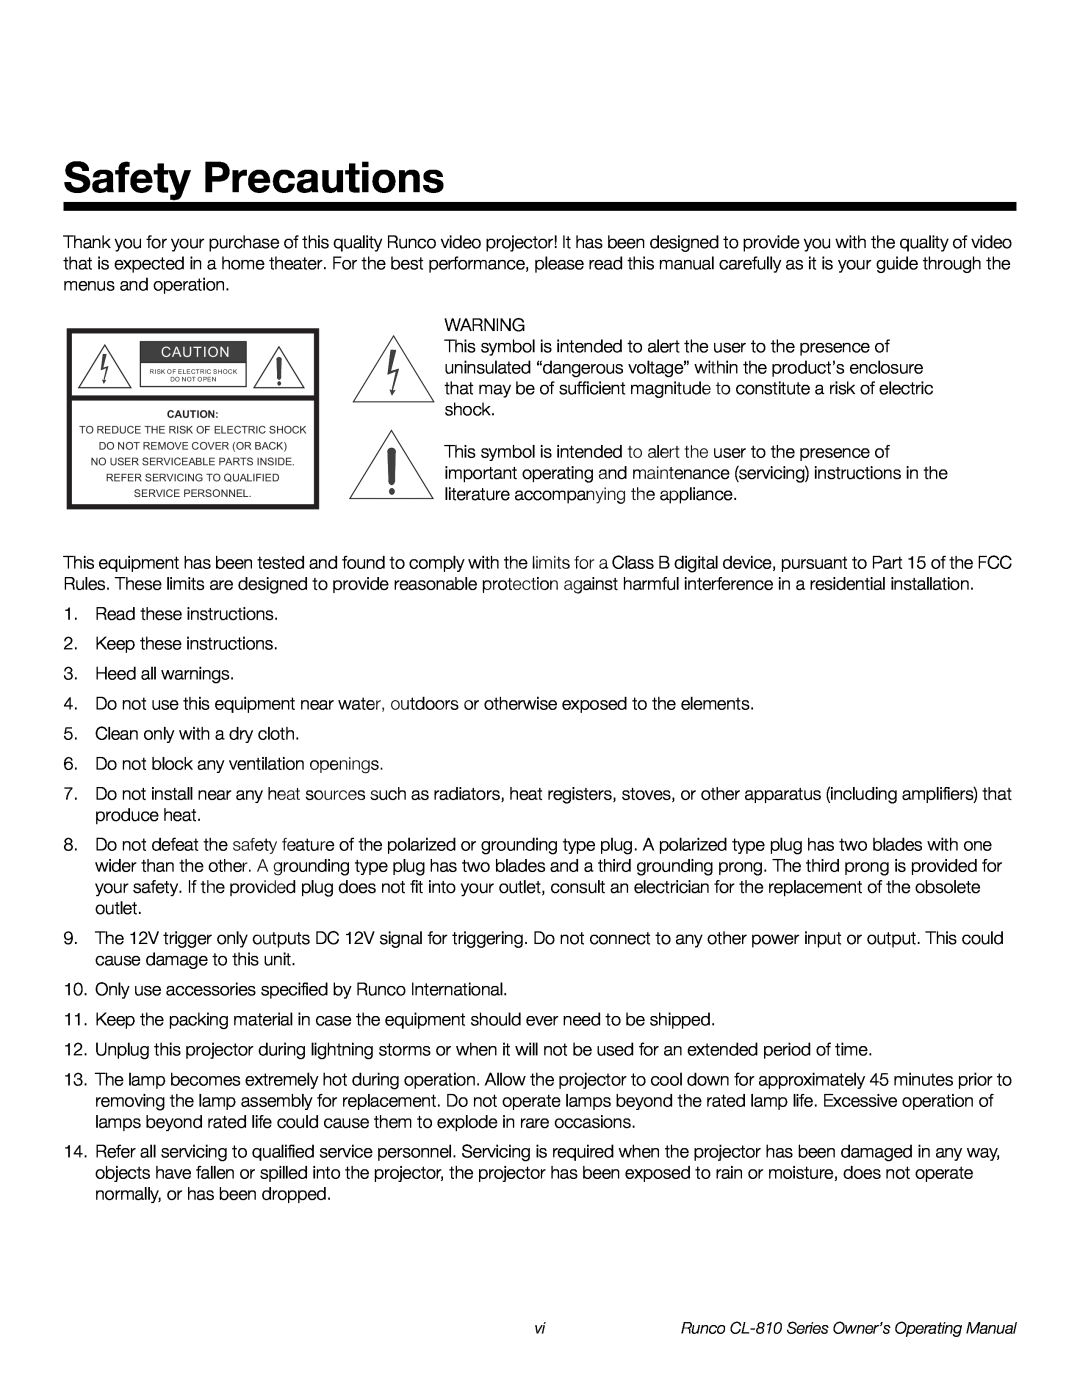 Runco CL-810 CINEWIDE, CL-810 ULTRA, CL-810 / SDC-1 manual Safety Precautions 